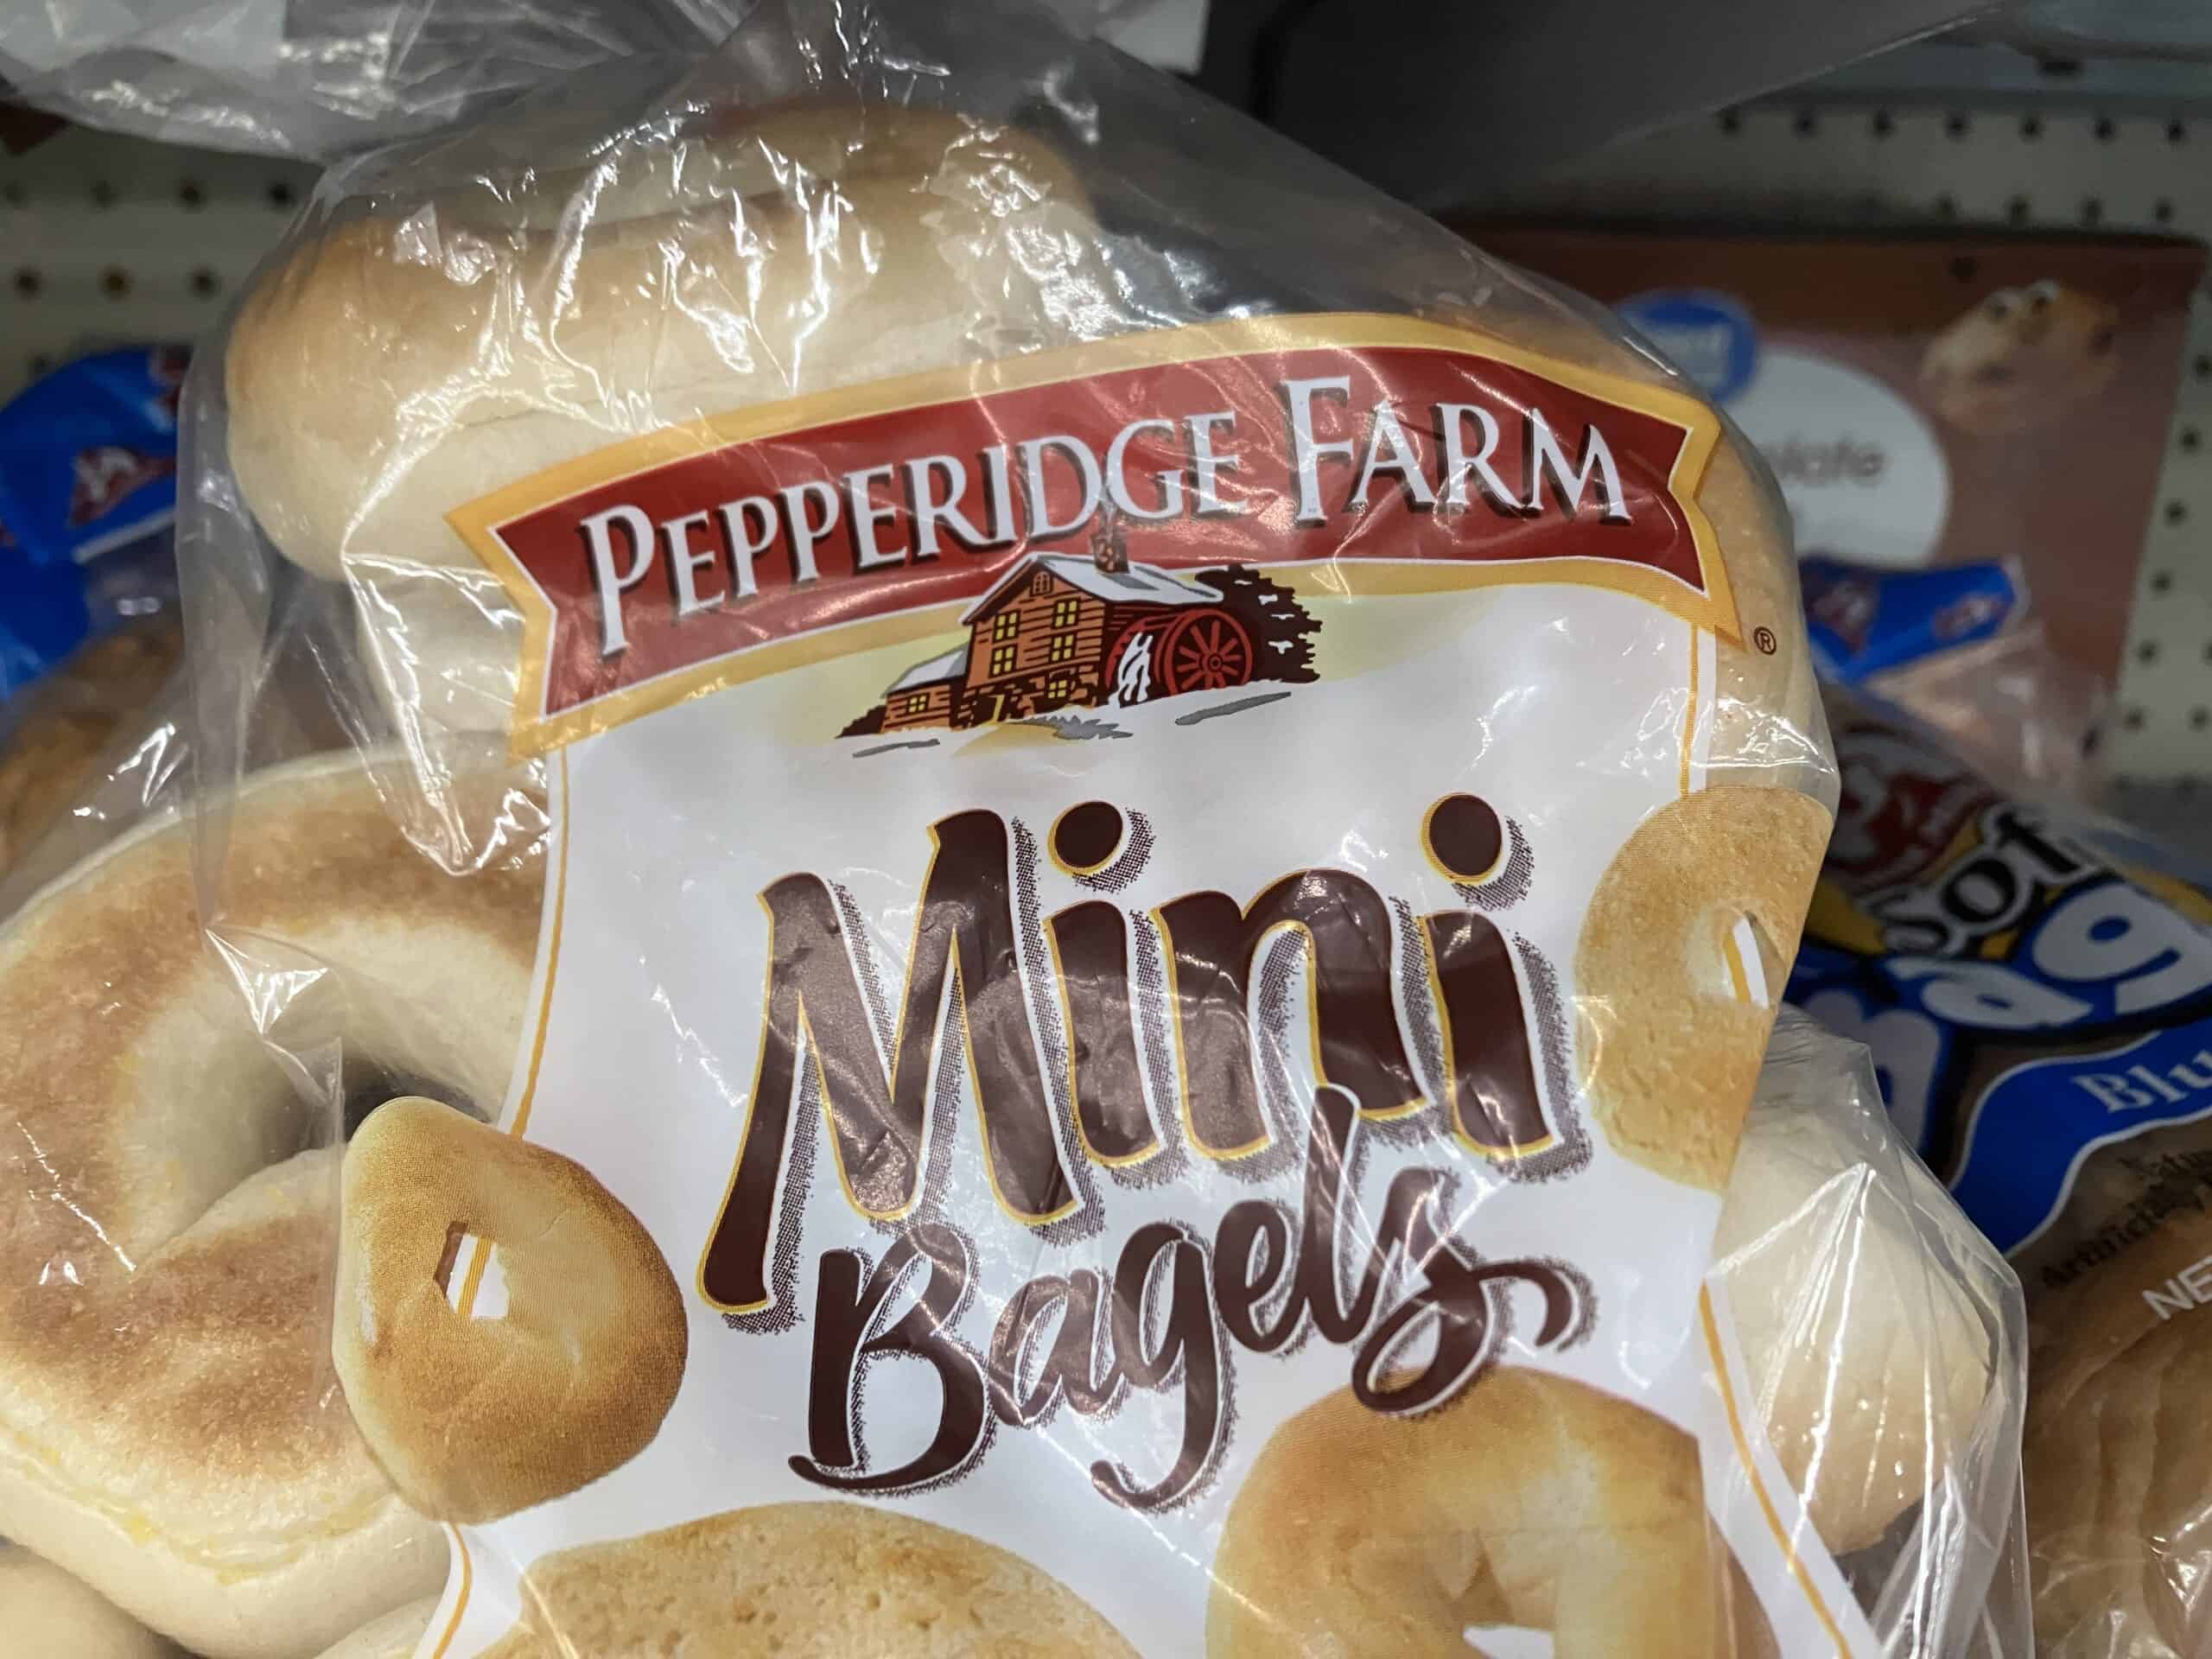 Pepperidge Farm mini bagels